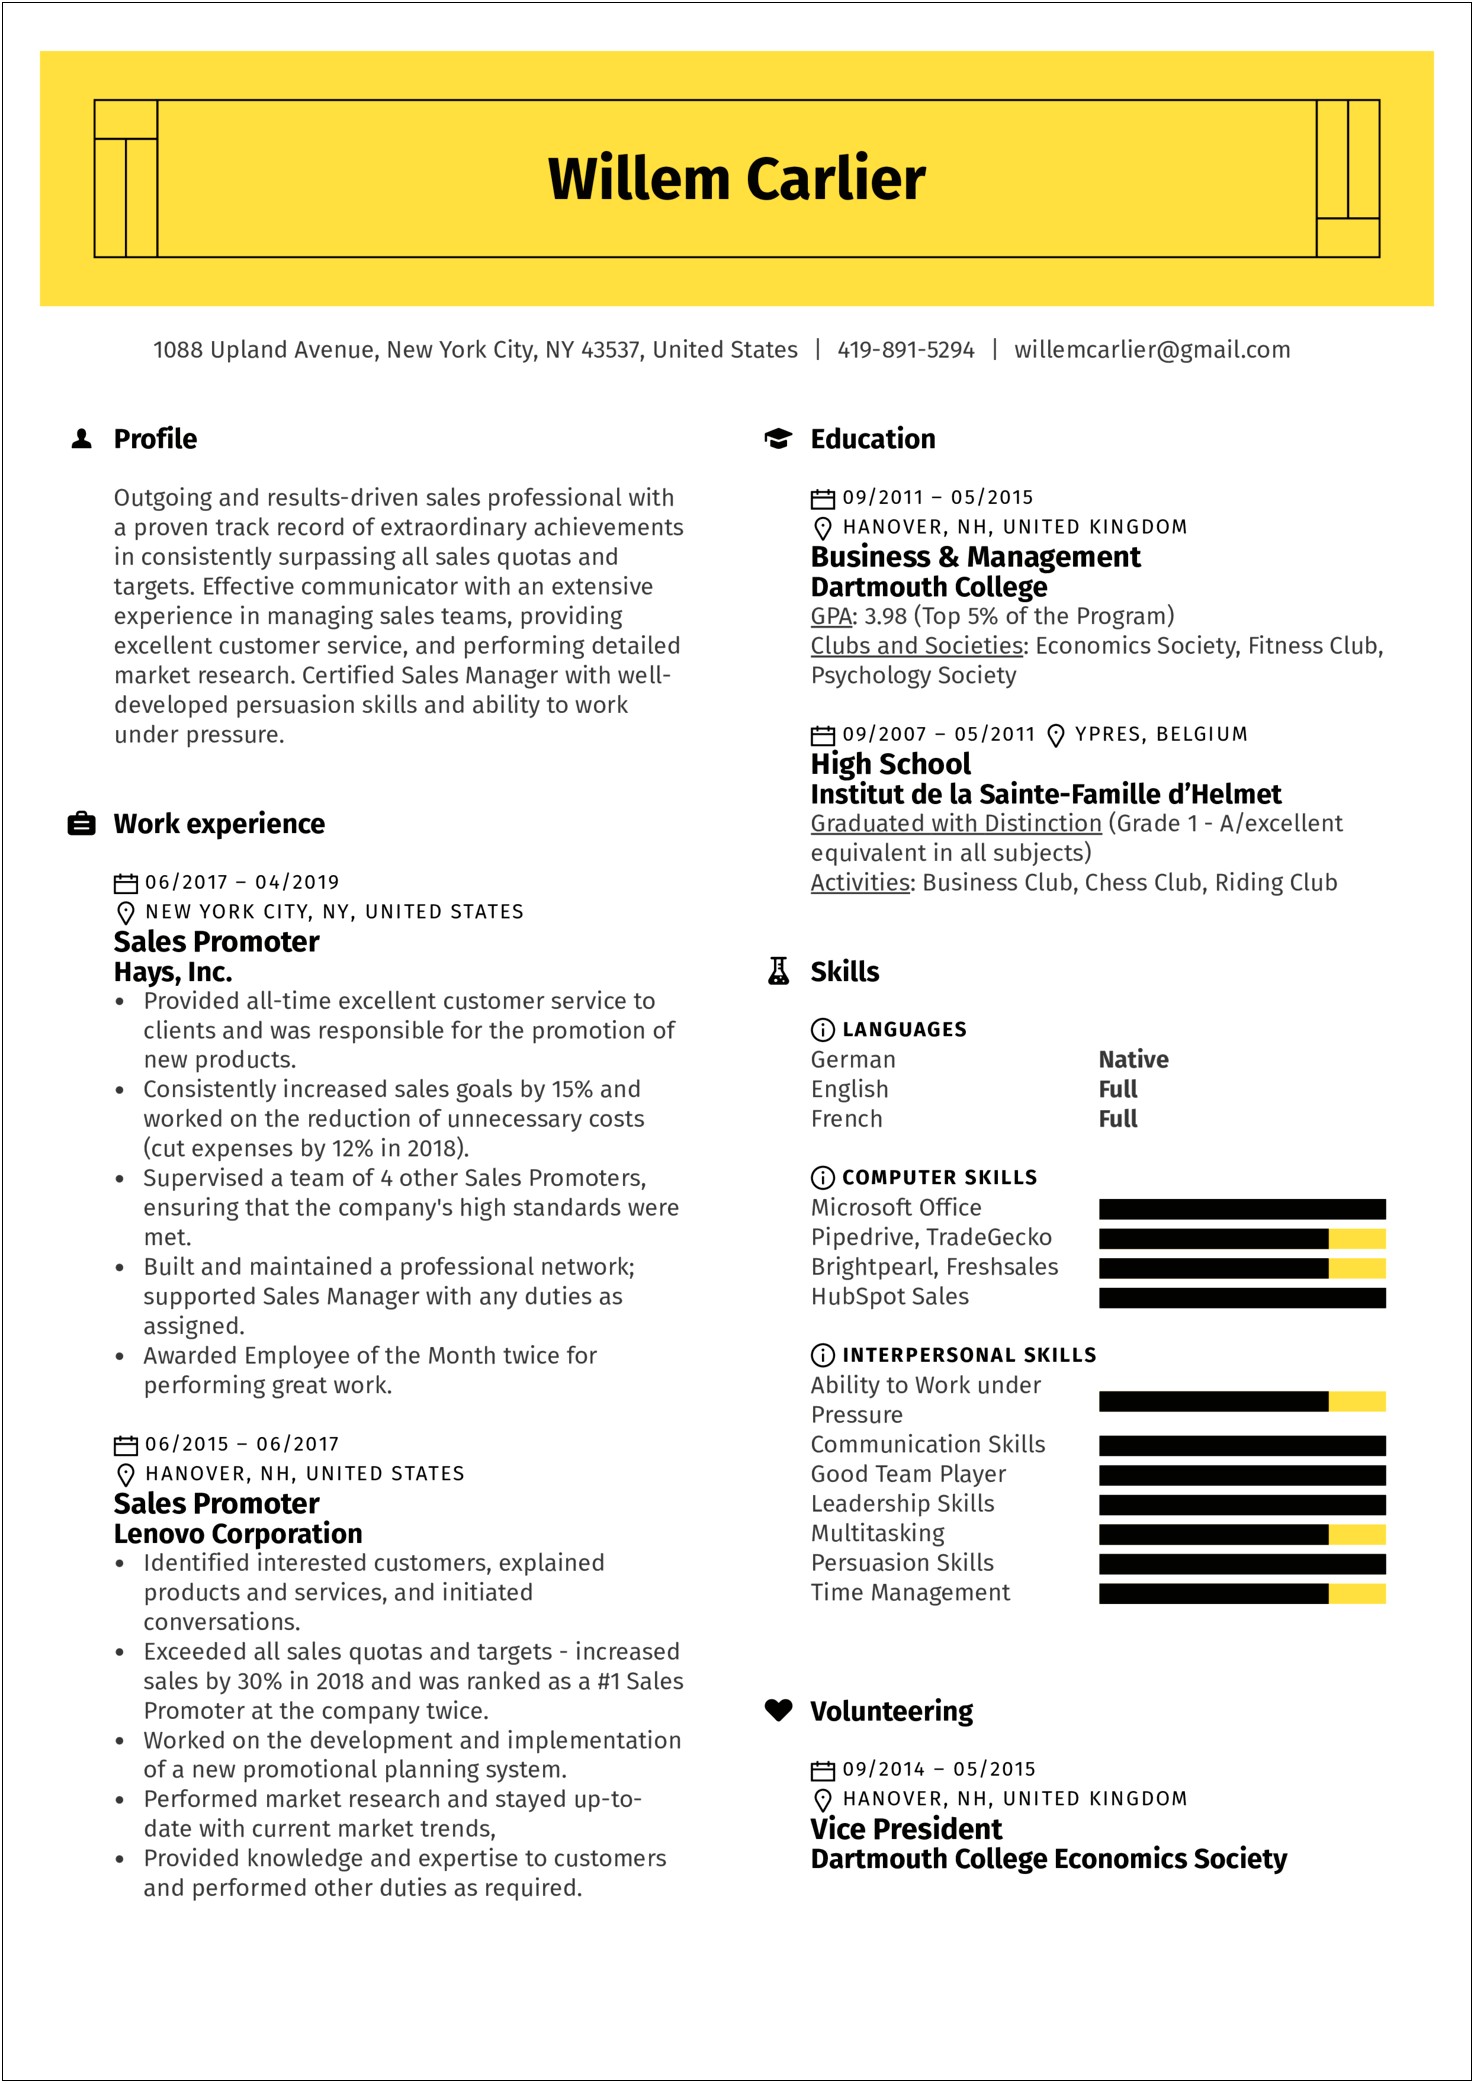 Real Estate Sales Associate Job Description Resume